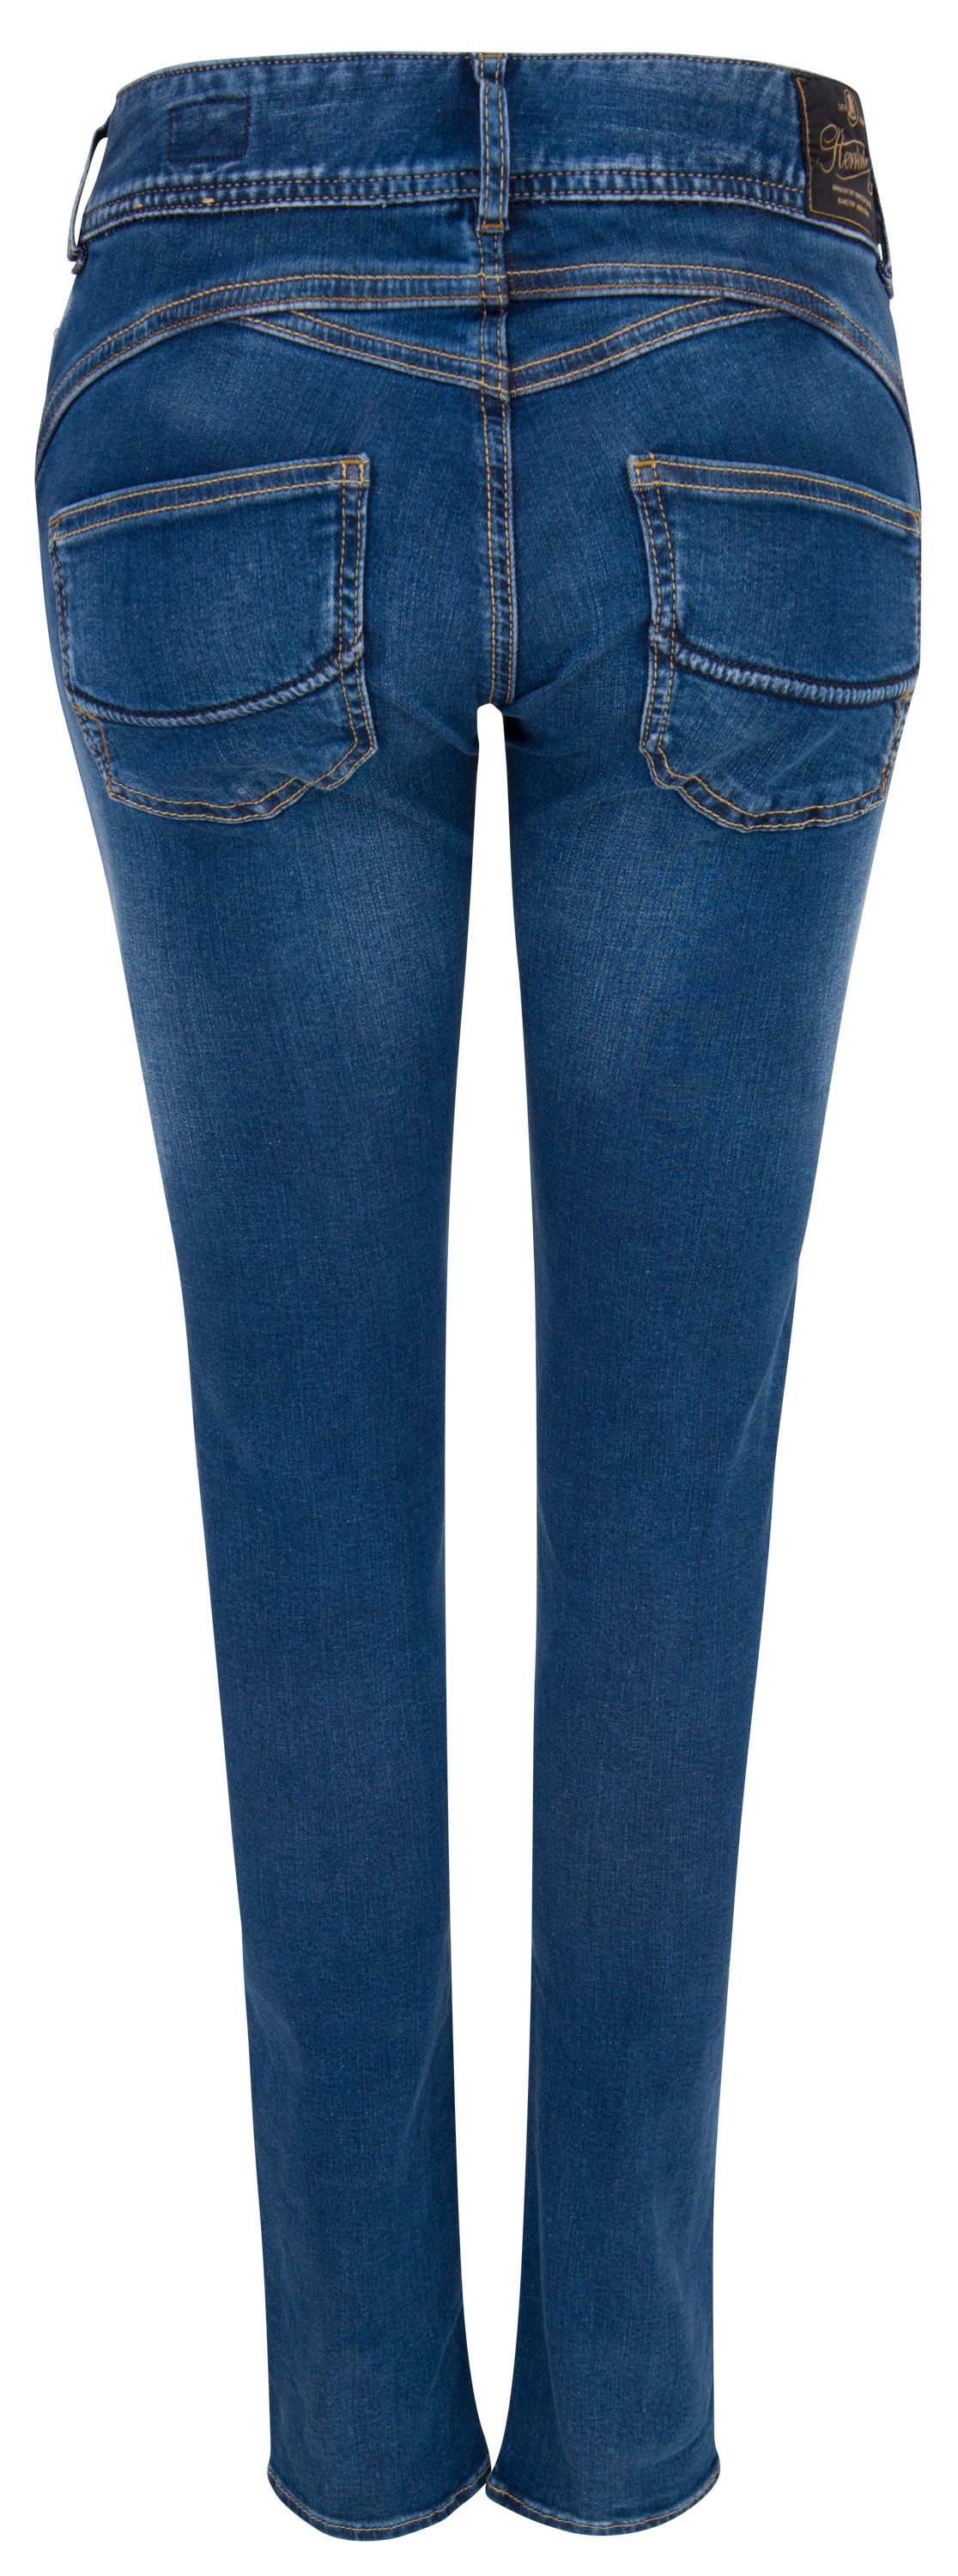 Jeans-Manufaktur dazzling | blue STRETCH Jeans | Slim Powerstretch Damen Denim GILA Herrlicher HERRLICHER 5606-D9668-663 | Gila | DENIM Jeans |